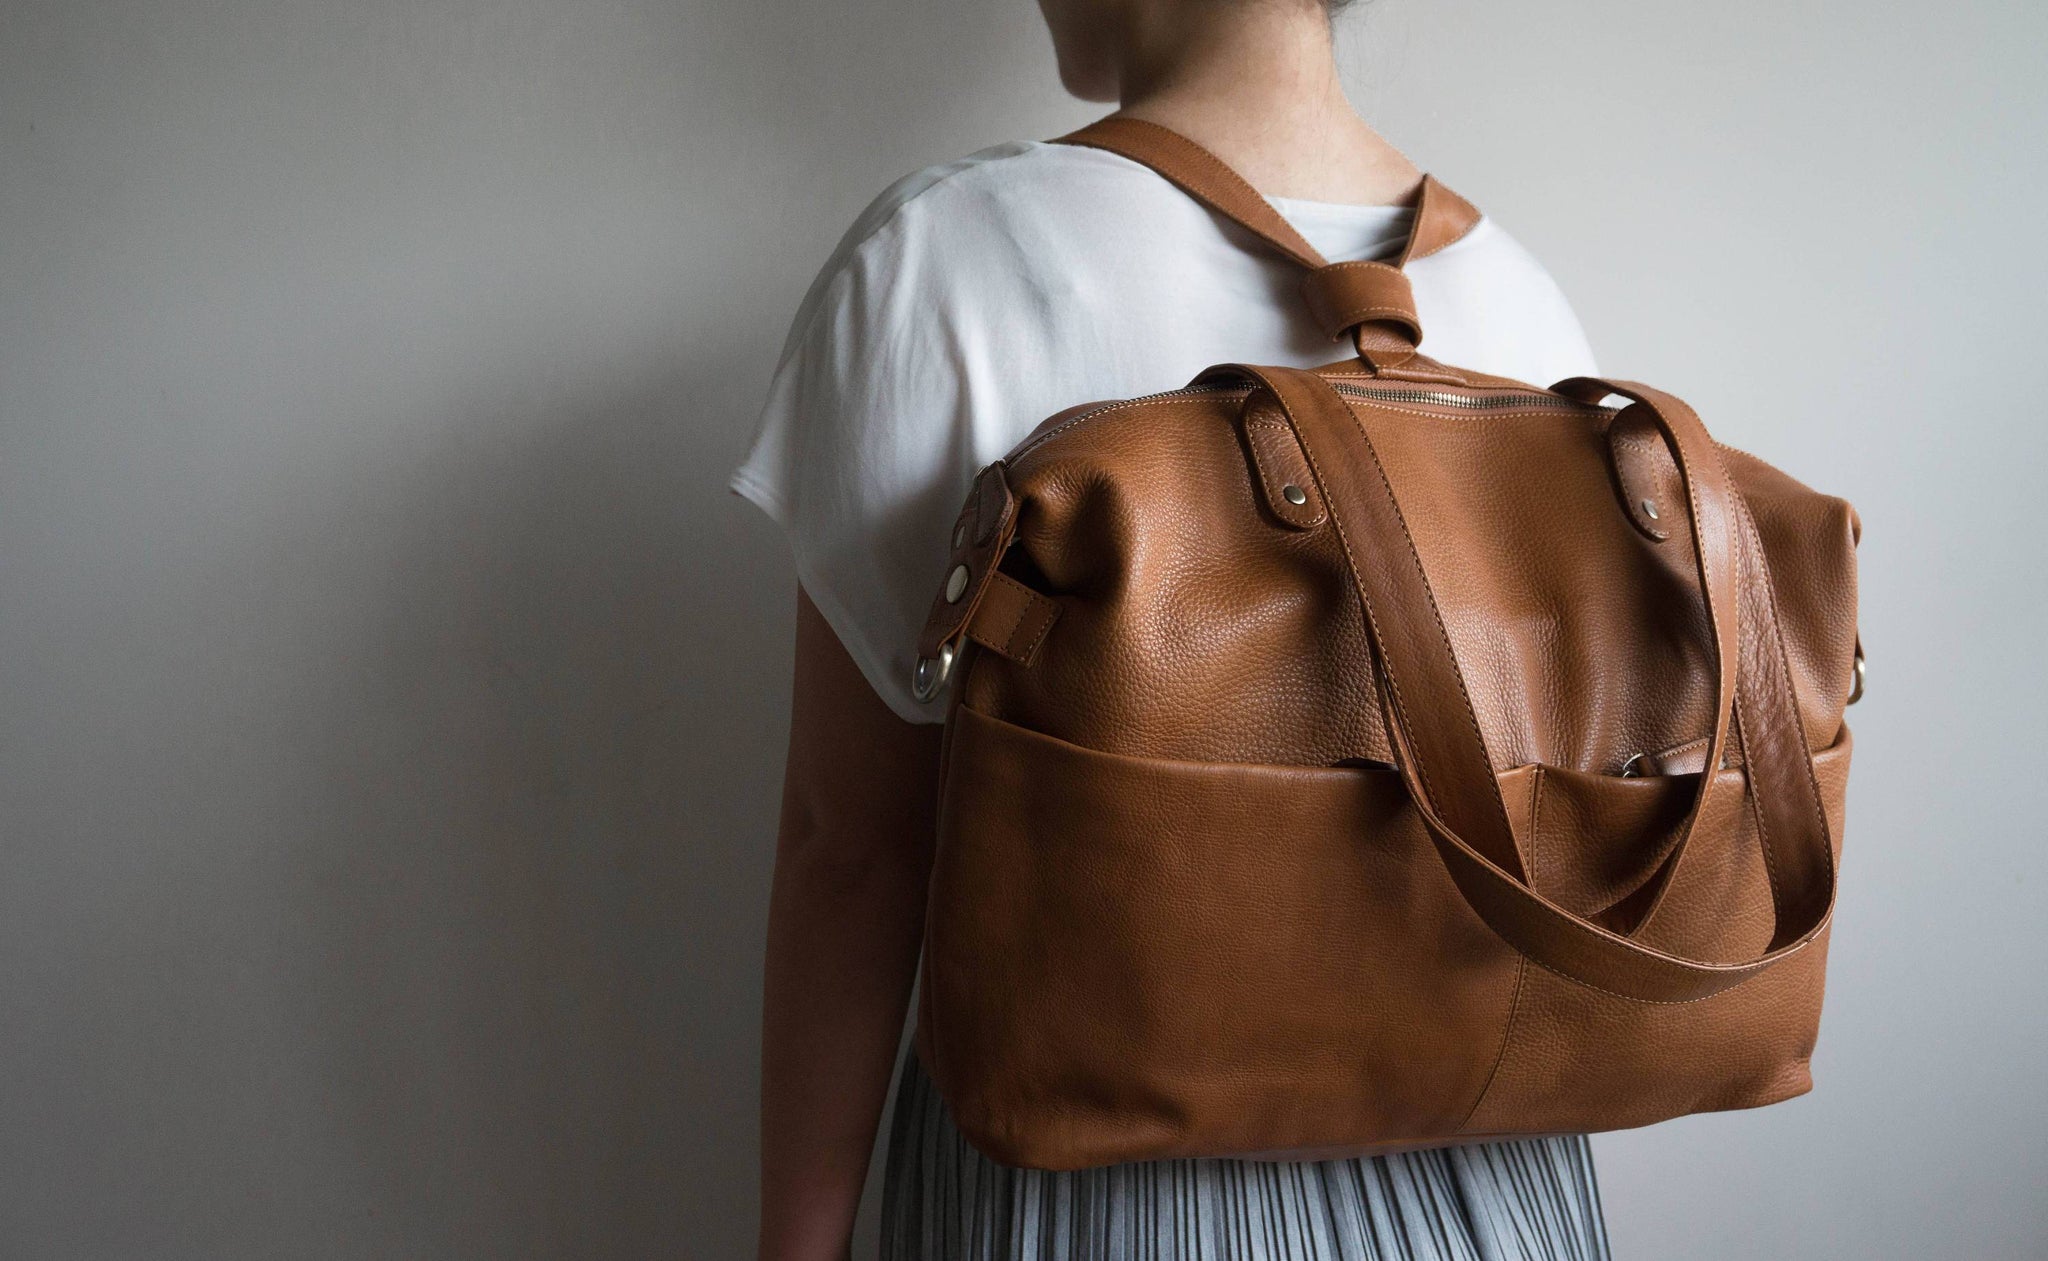 Etra Tan Suede Leather Clutch Purse / Shoulder Bag Convert - Ruby Lane